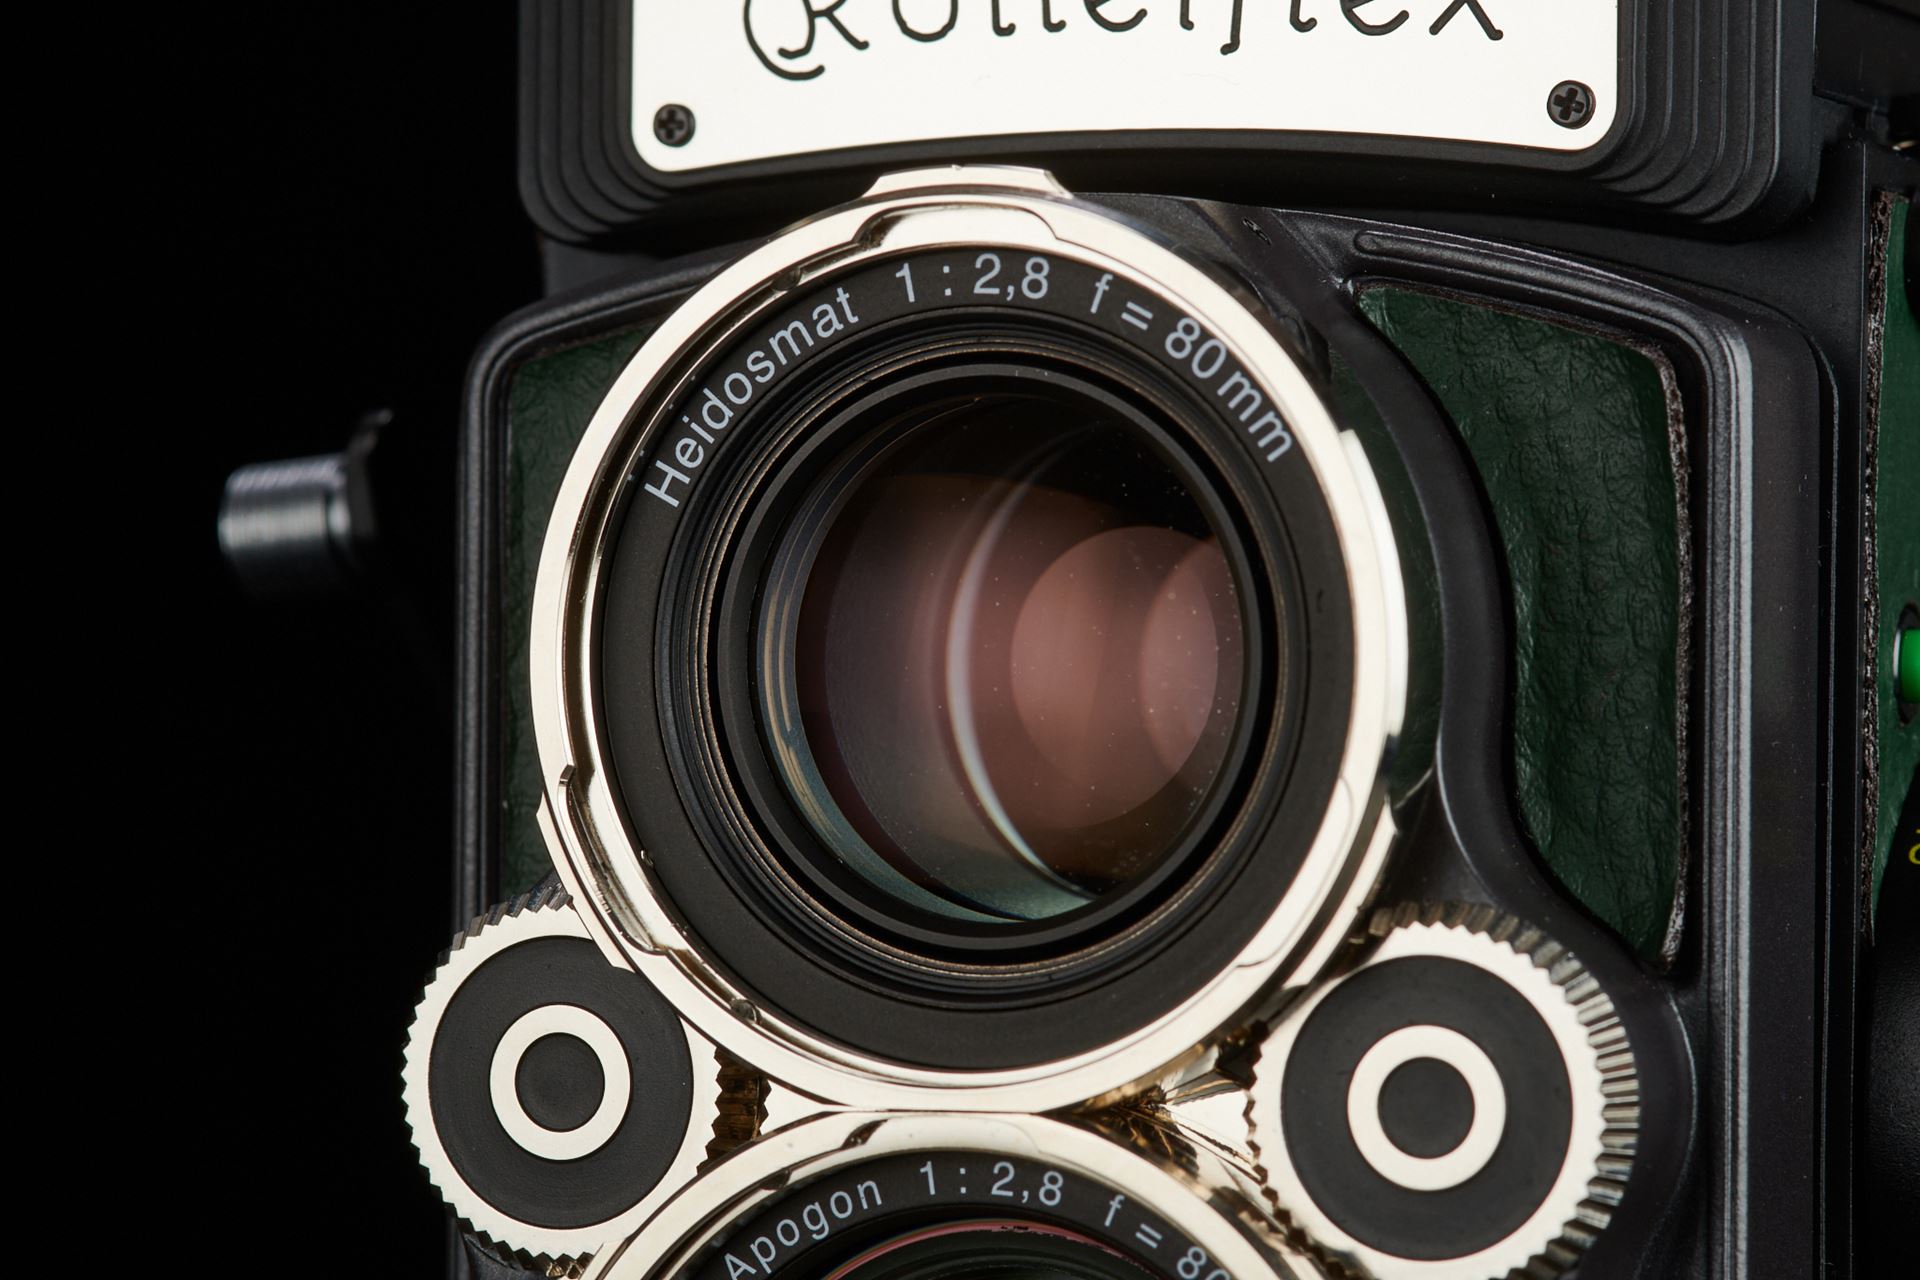 Picture of Rolleiflex 2.8 FX Platin Prototyp Green